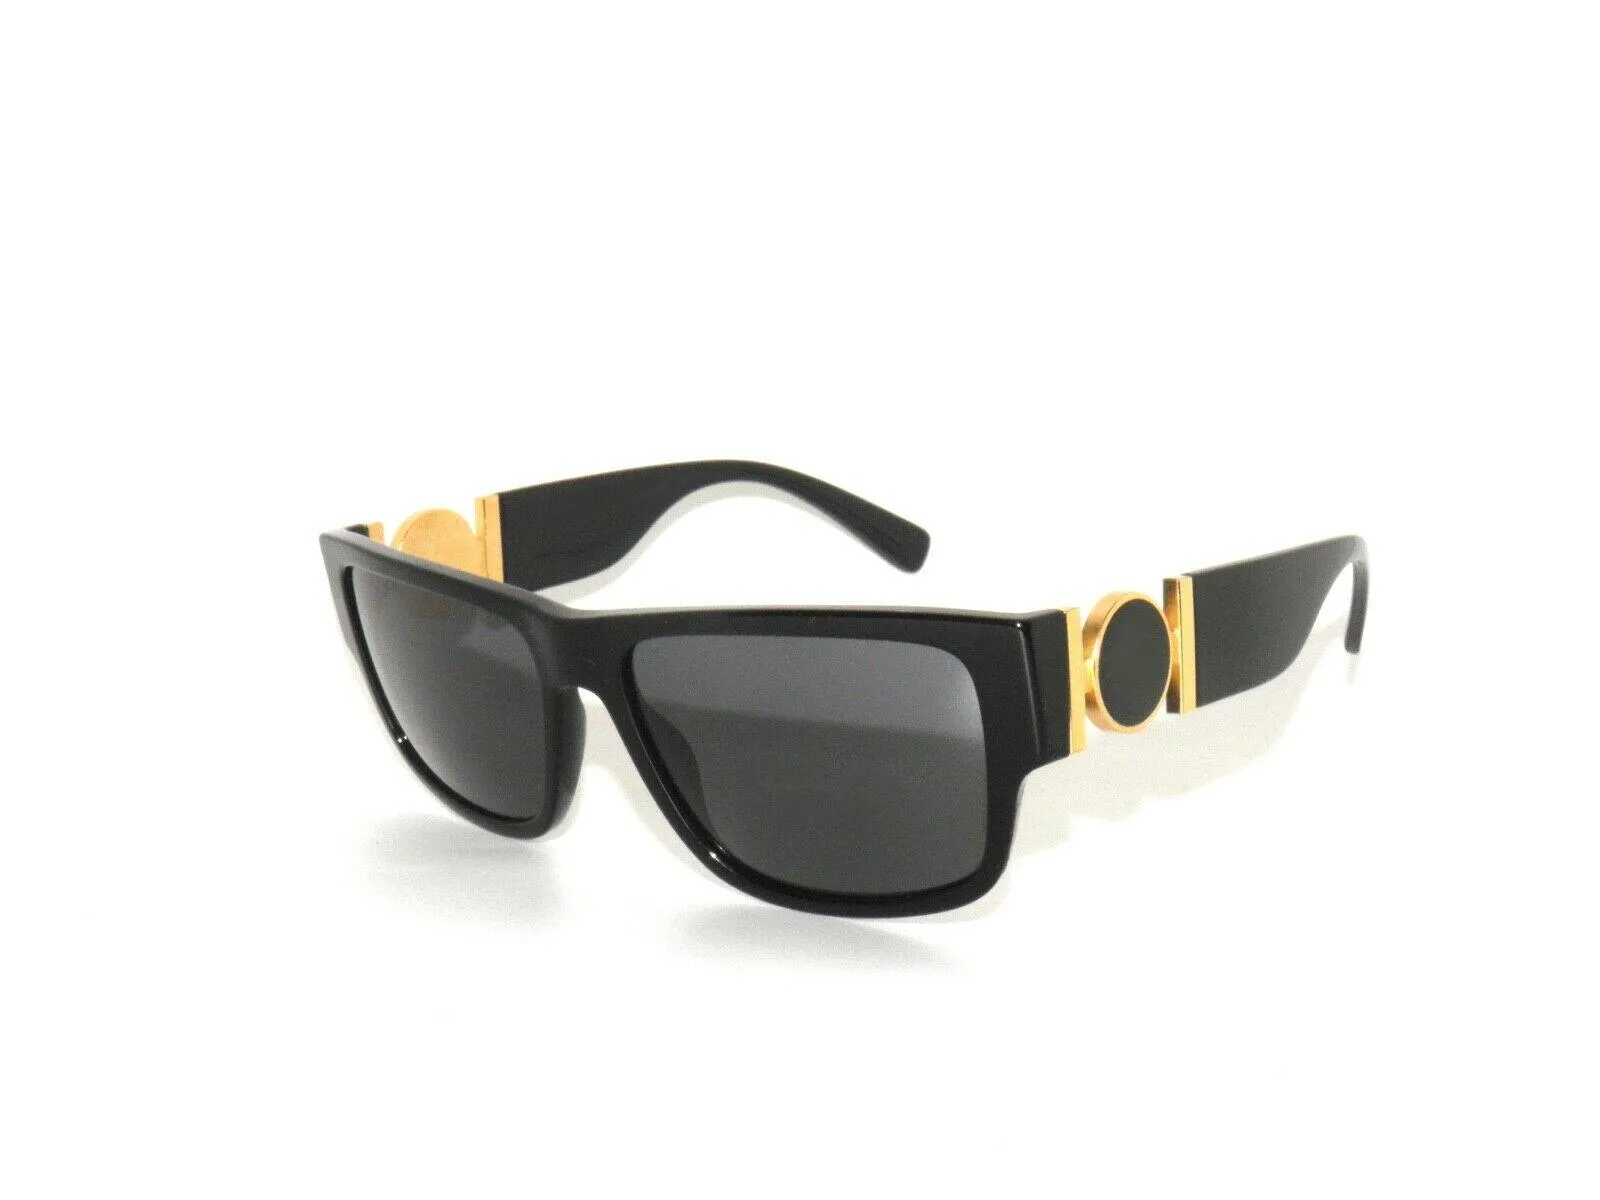 Summer Sunglasses Man Woman Fashion Glasses Square Frame Design Unisex 4369 Black Grey Rectangle Mens Sunglasses UV400 Top Quality233m